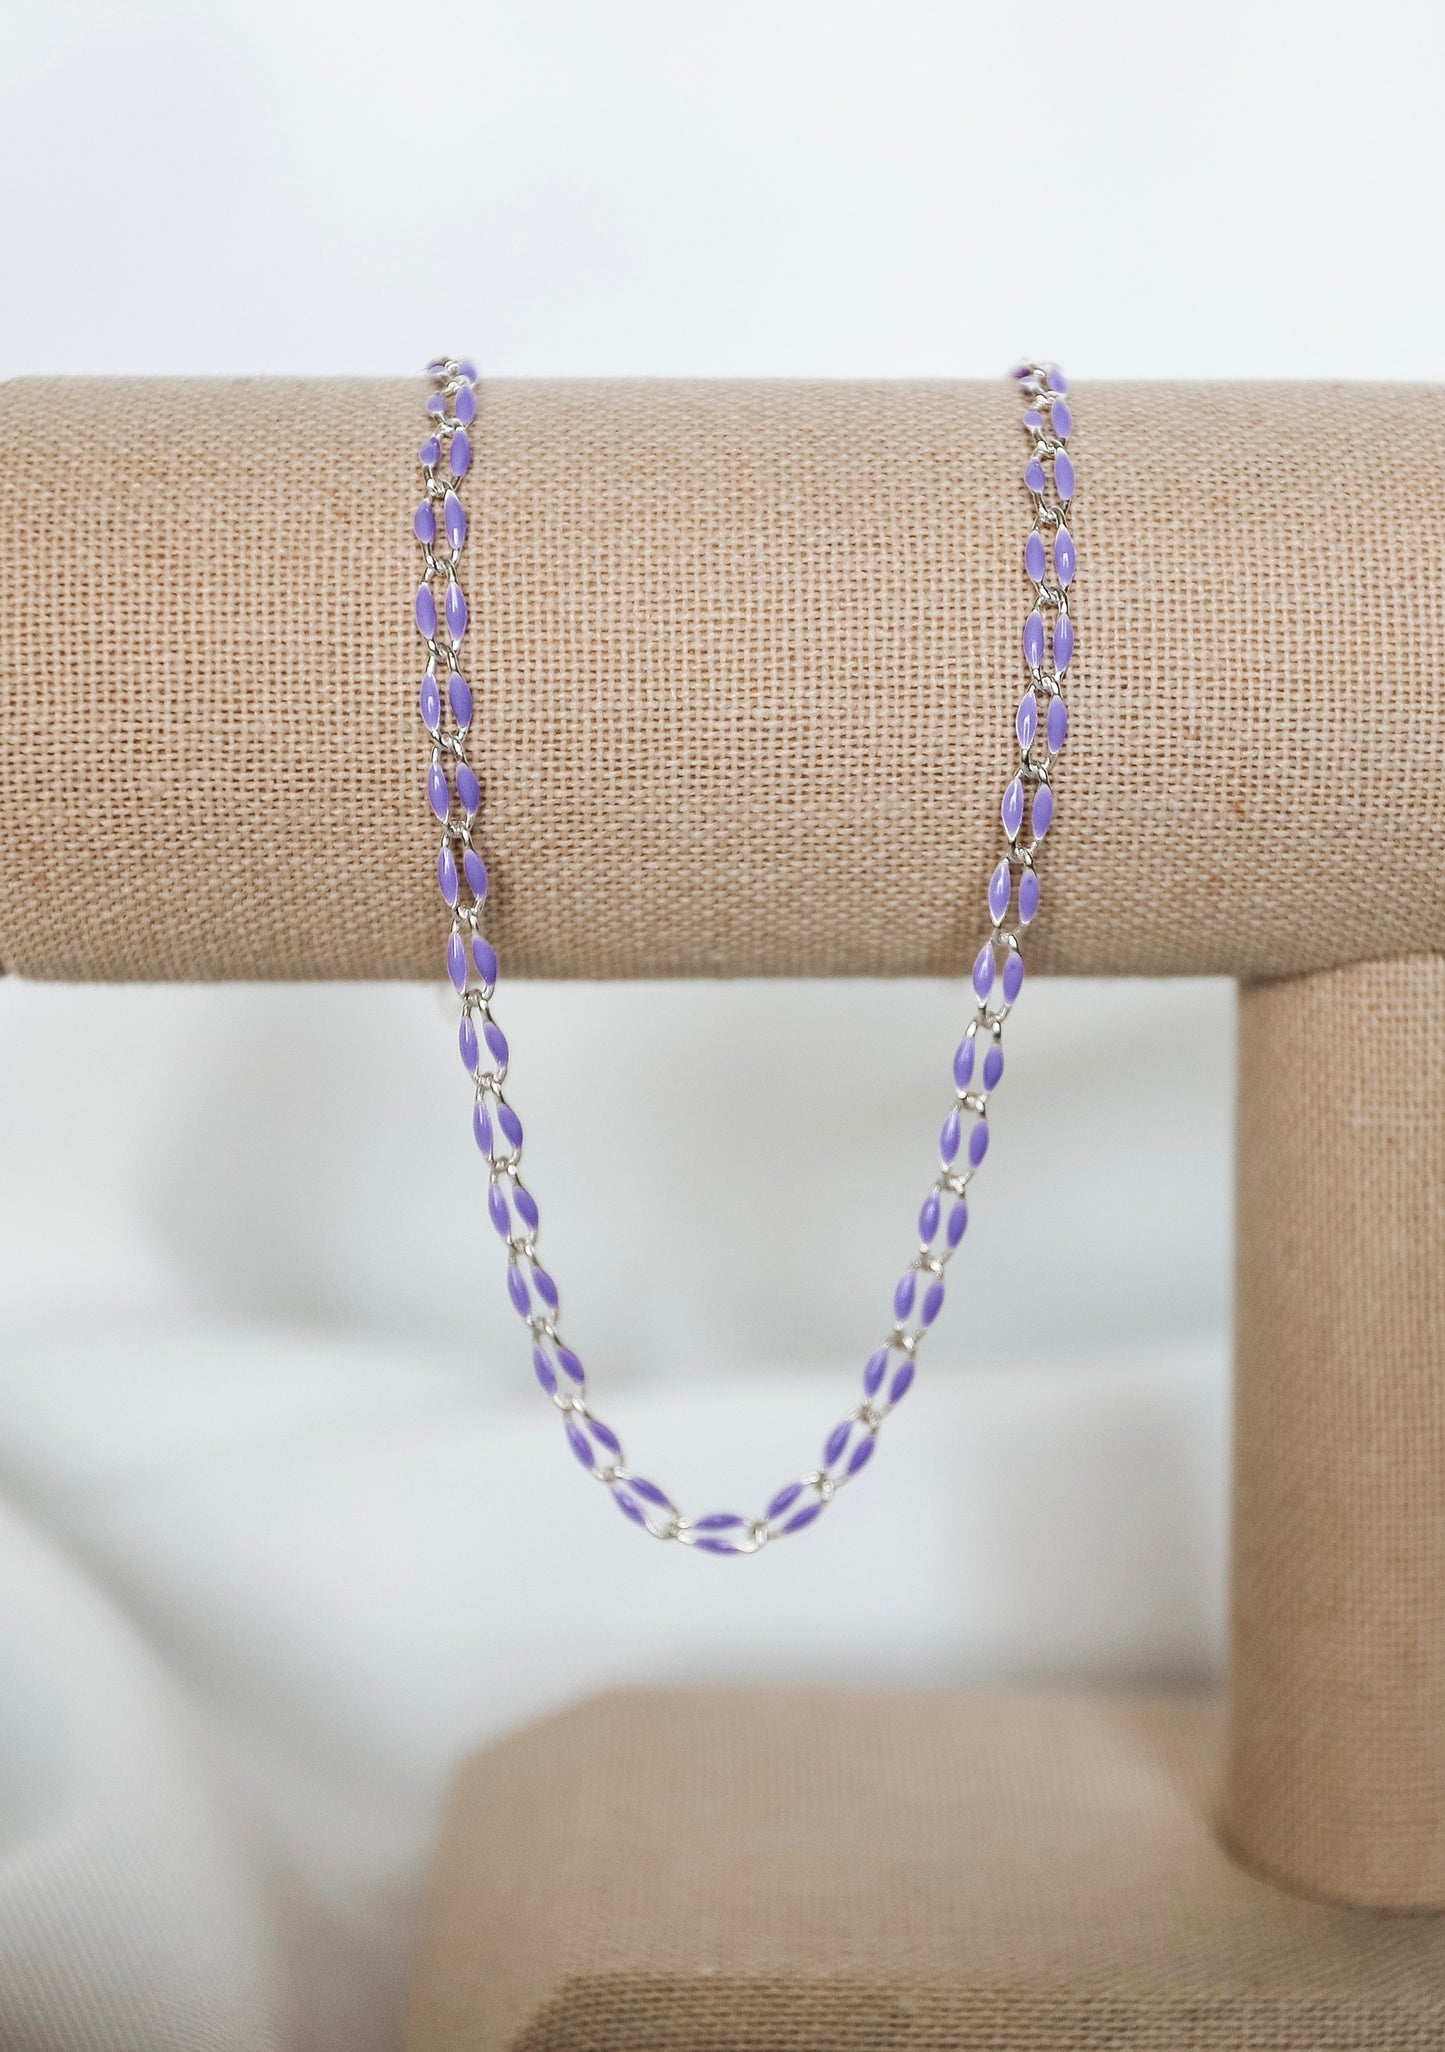 Plated Enamel Chain - Lavender